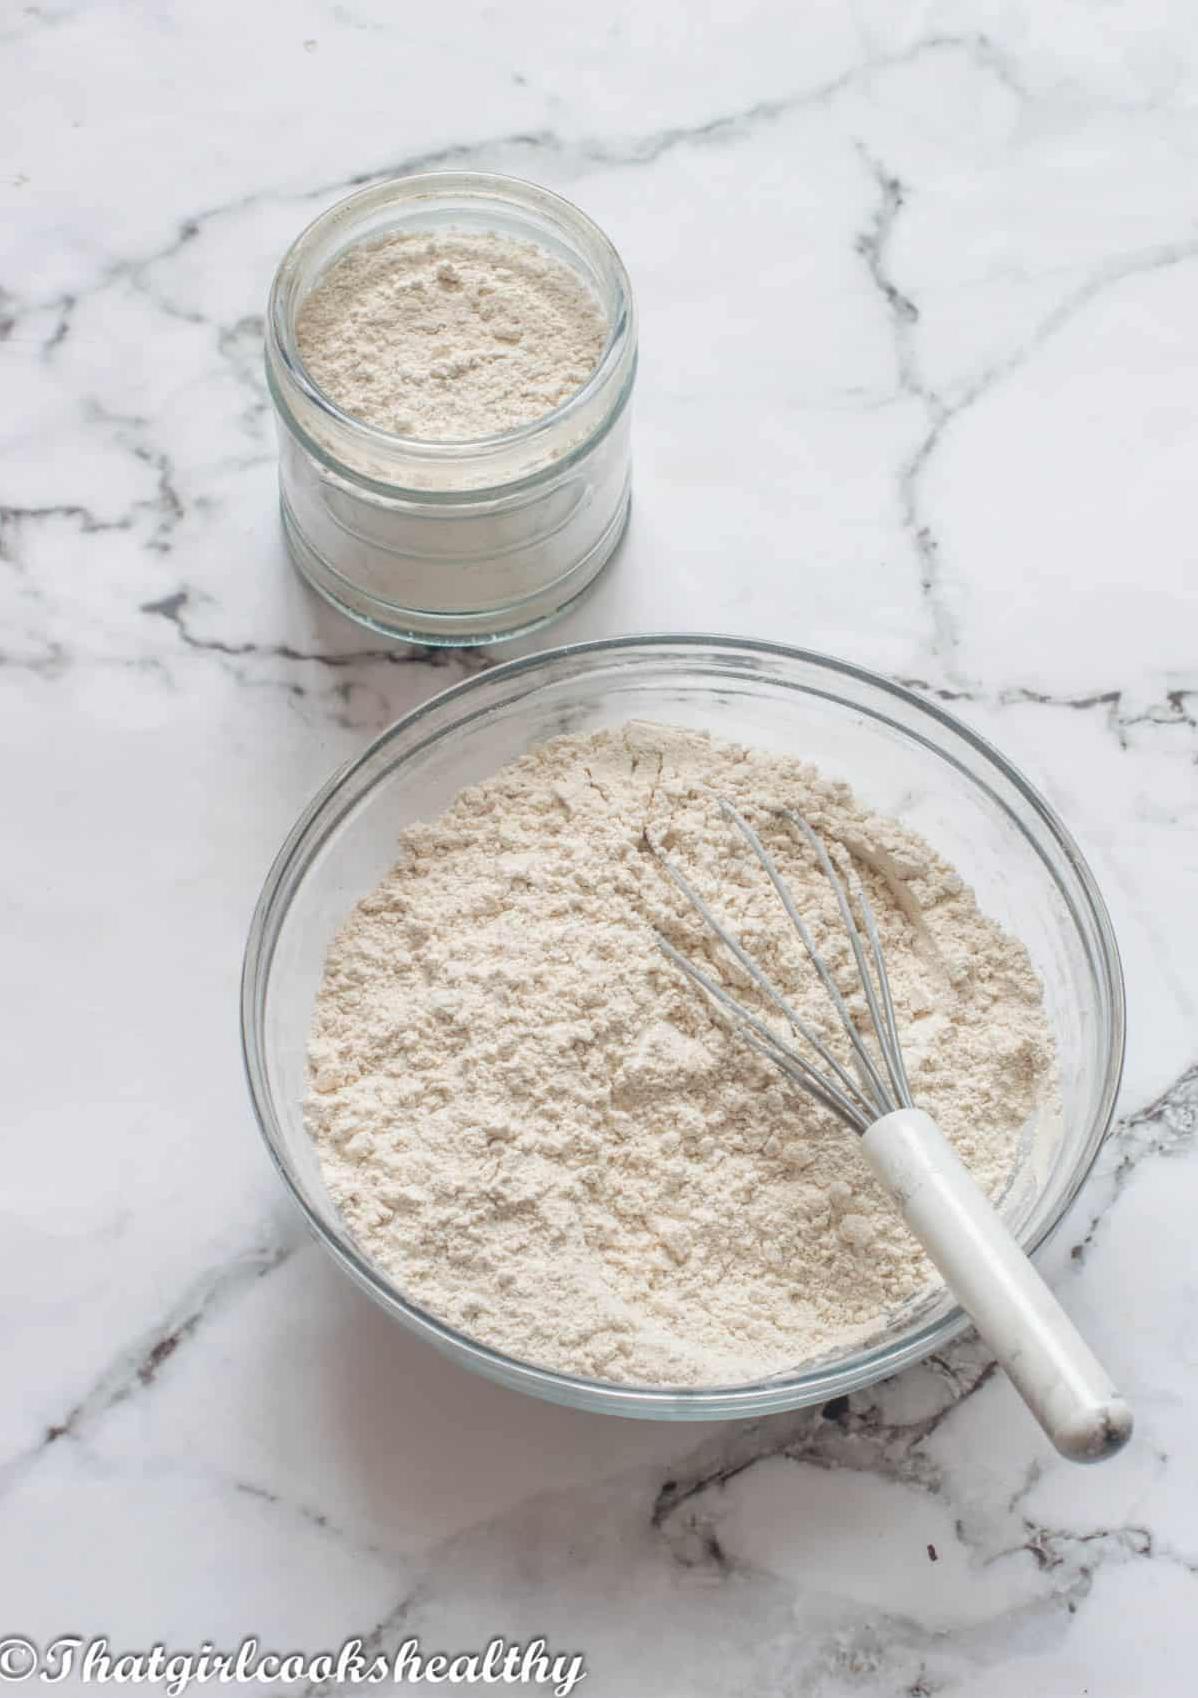 Nutritious and Infallible Gluten Free Baking Flour